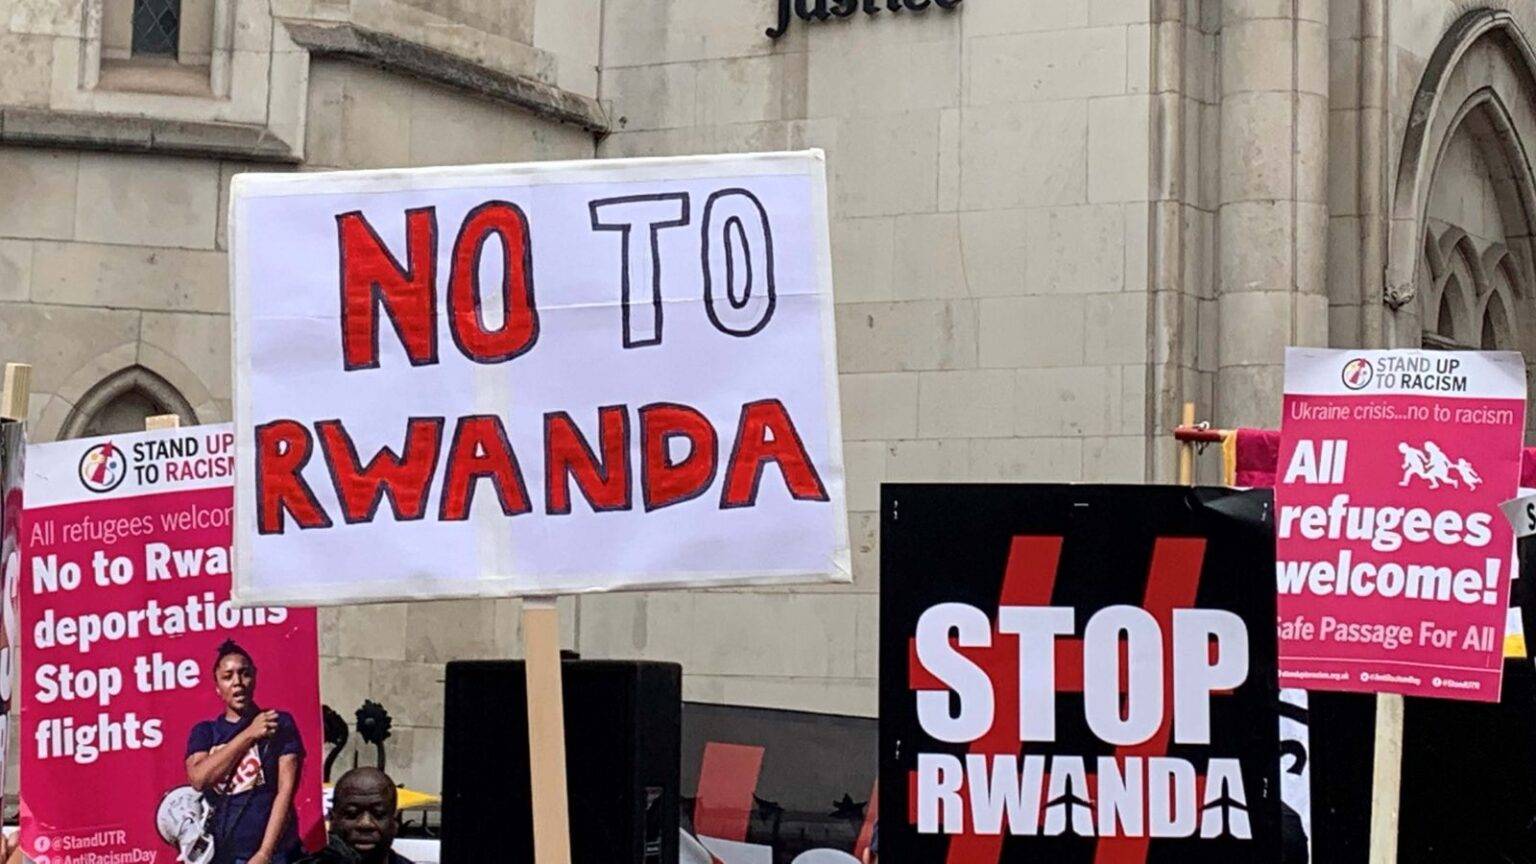 Sunday Papers - ‘Rwandans get UK asylum’ - the full perspective 